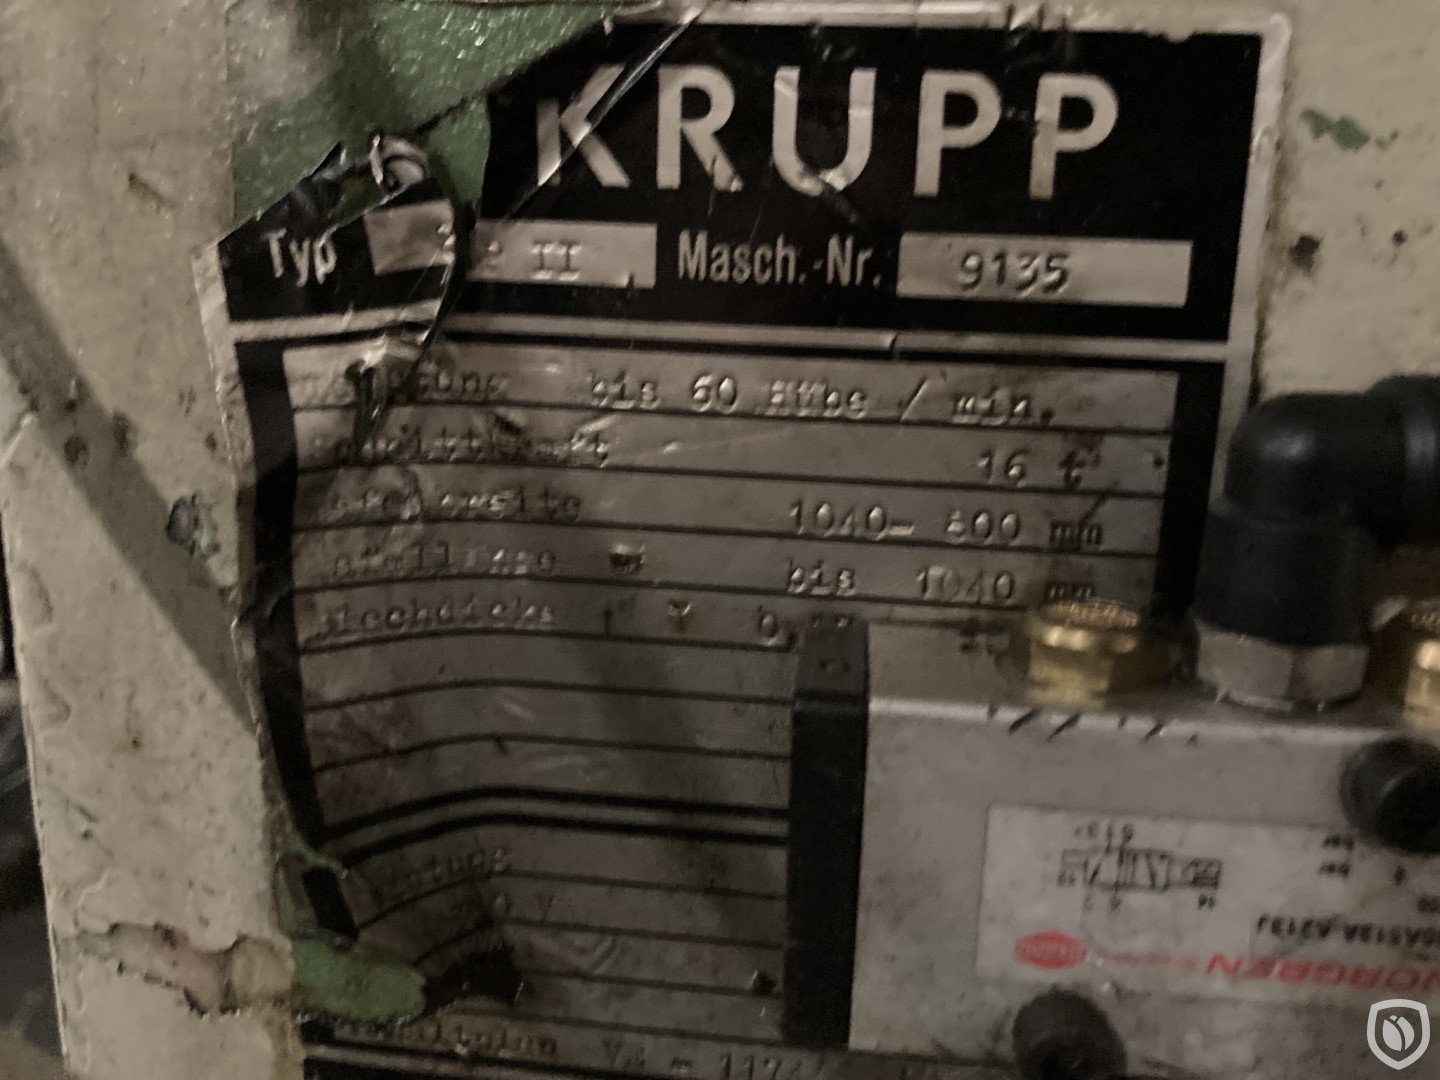 Krupp machine plate